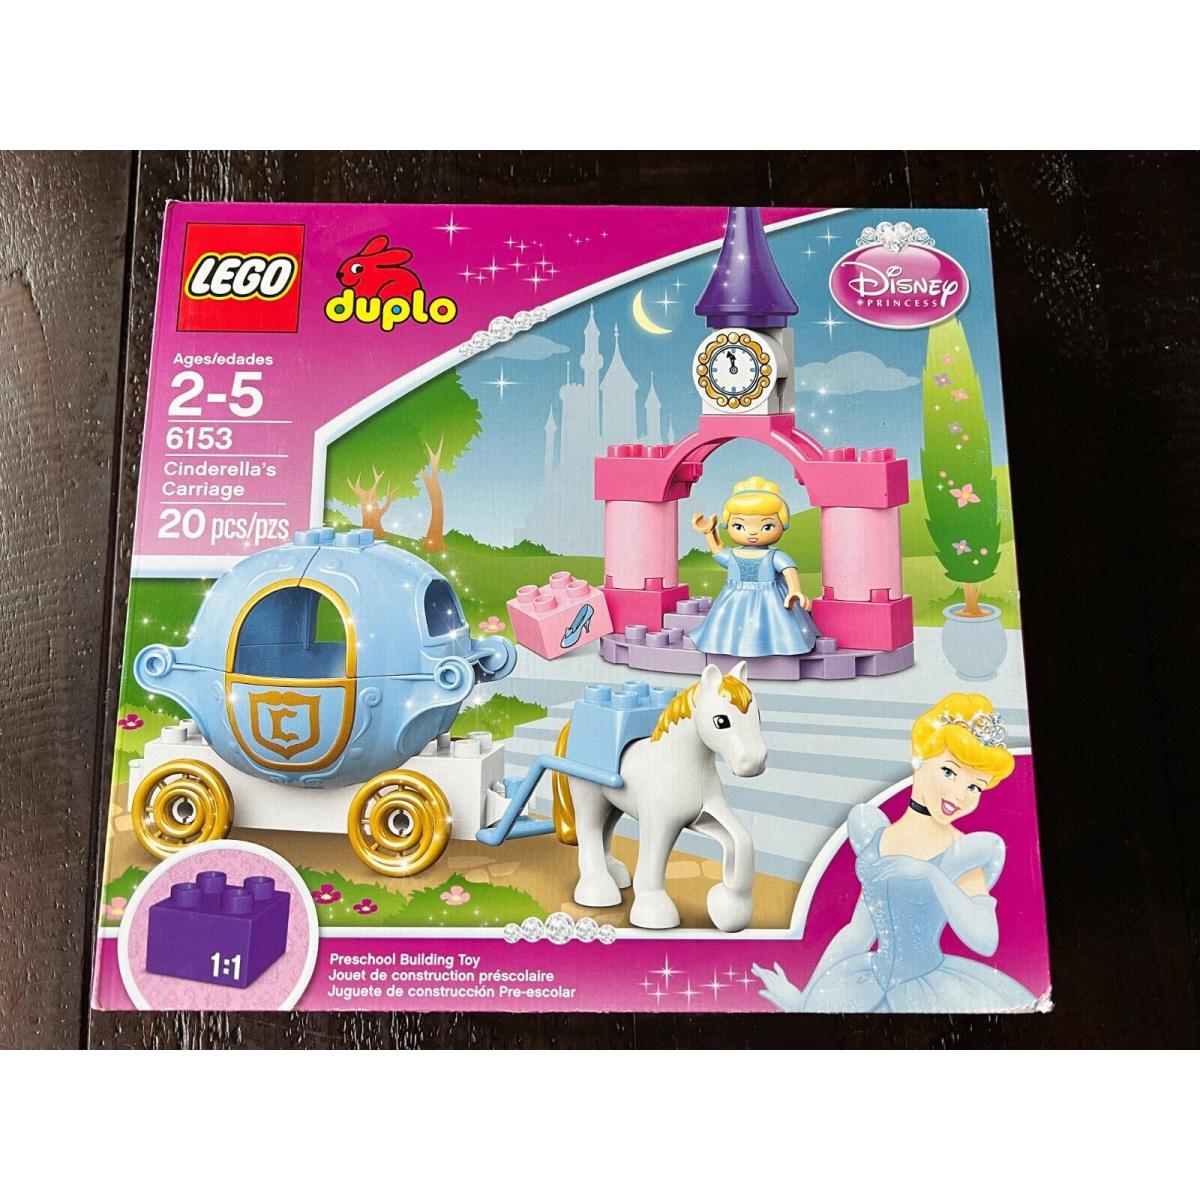 Retired Lego Duplo 6153 Cinderella`s Carriage